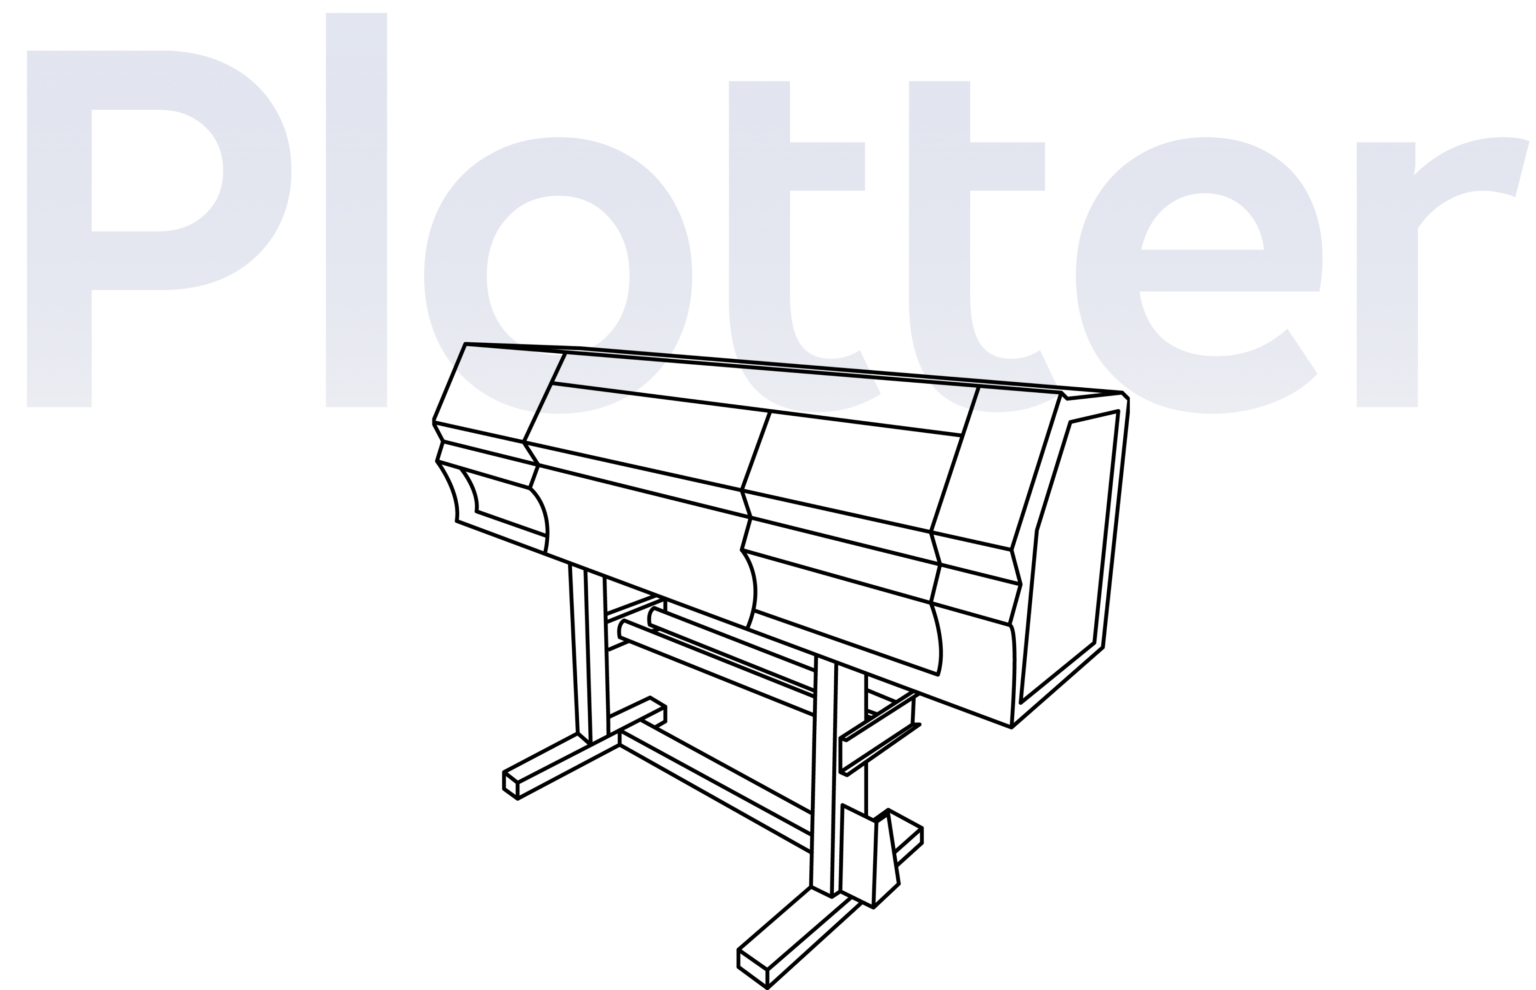 pltter-1536x990